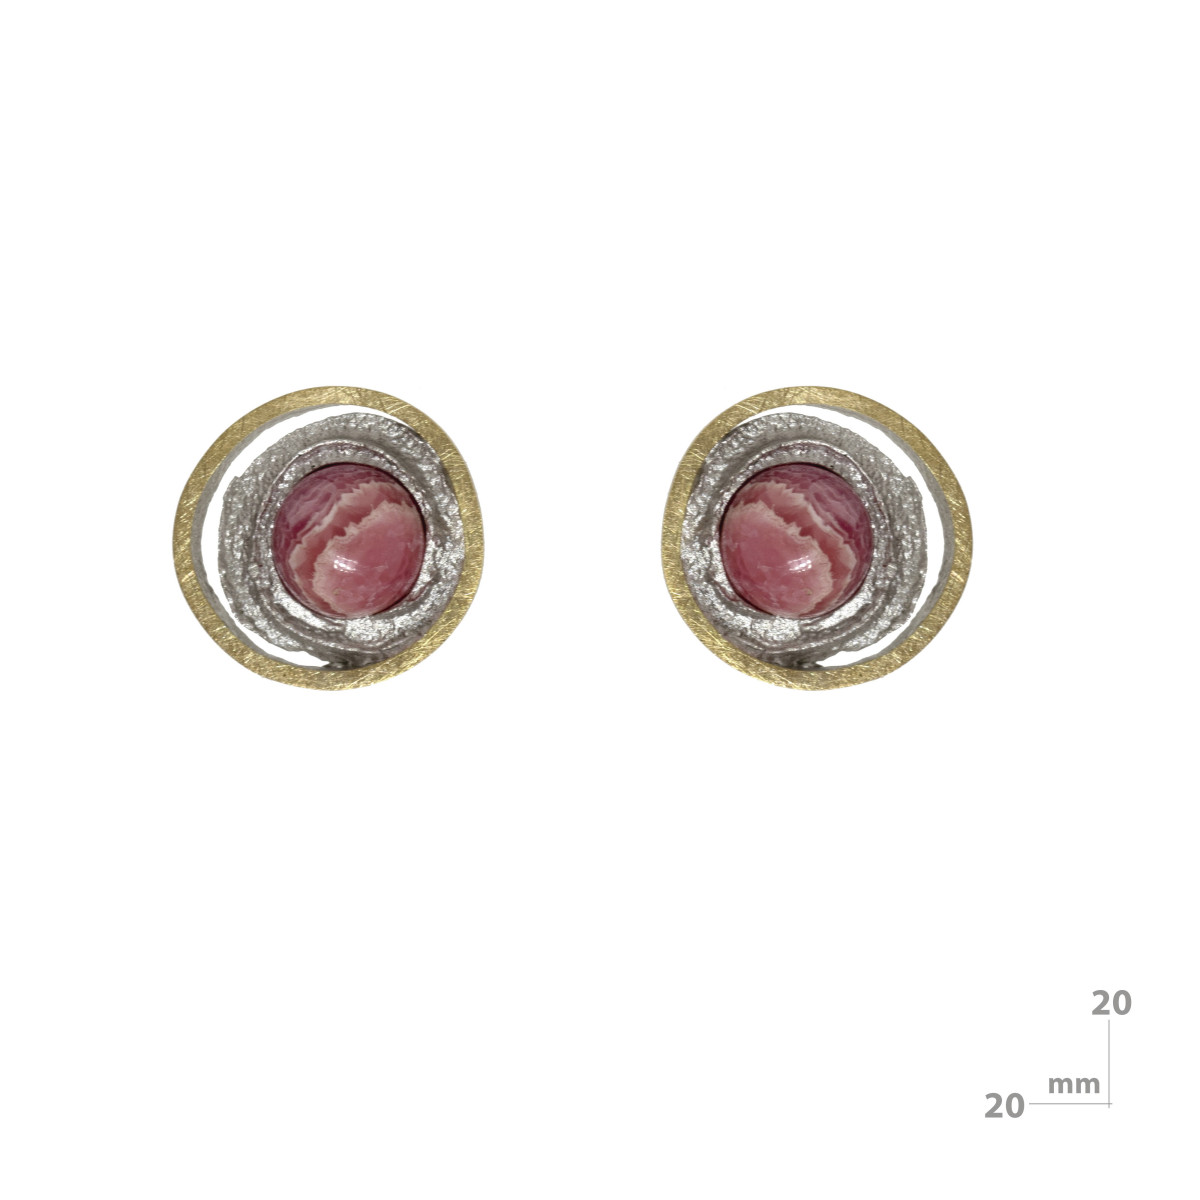 Silver, gold and rhodochrosite earrings